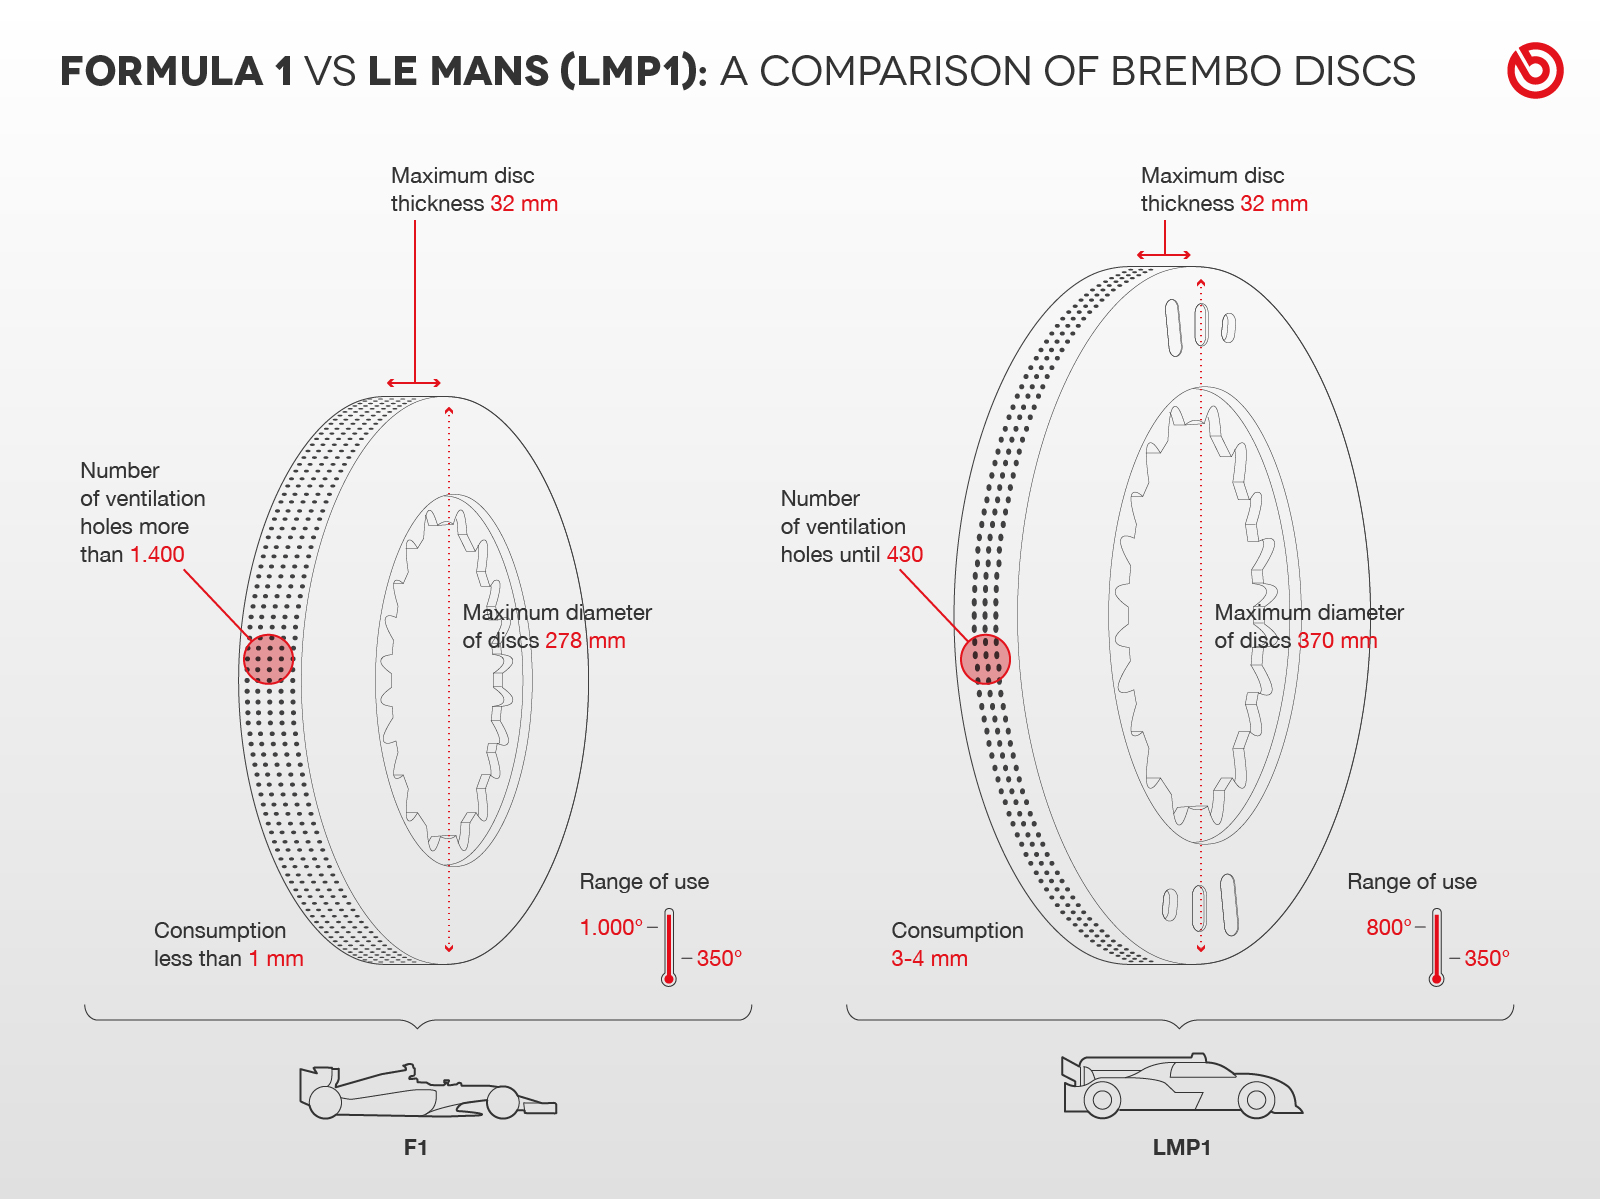 f1 and LMP1 24 hours le mans 2016 comparison brembo brake discs